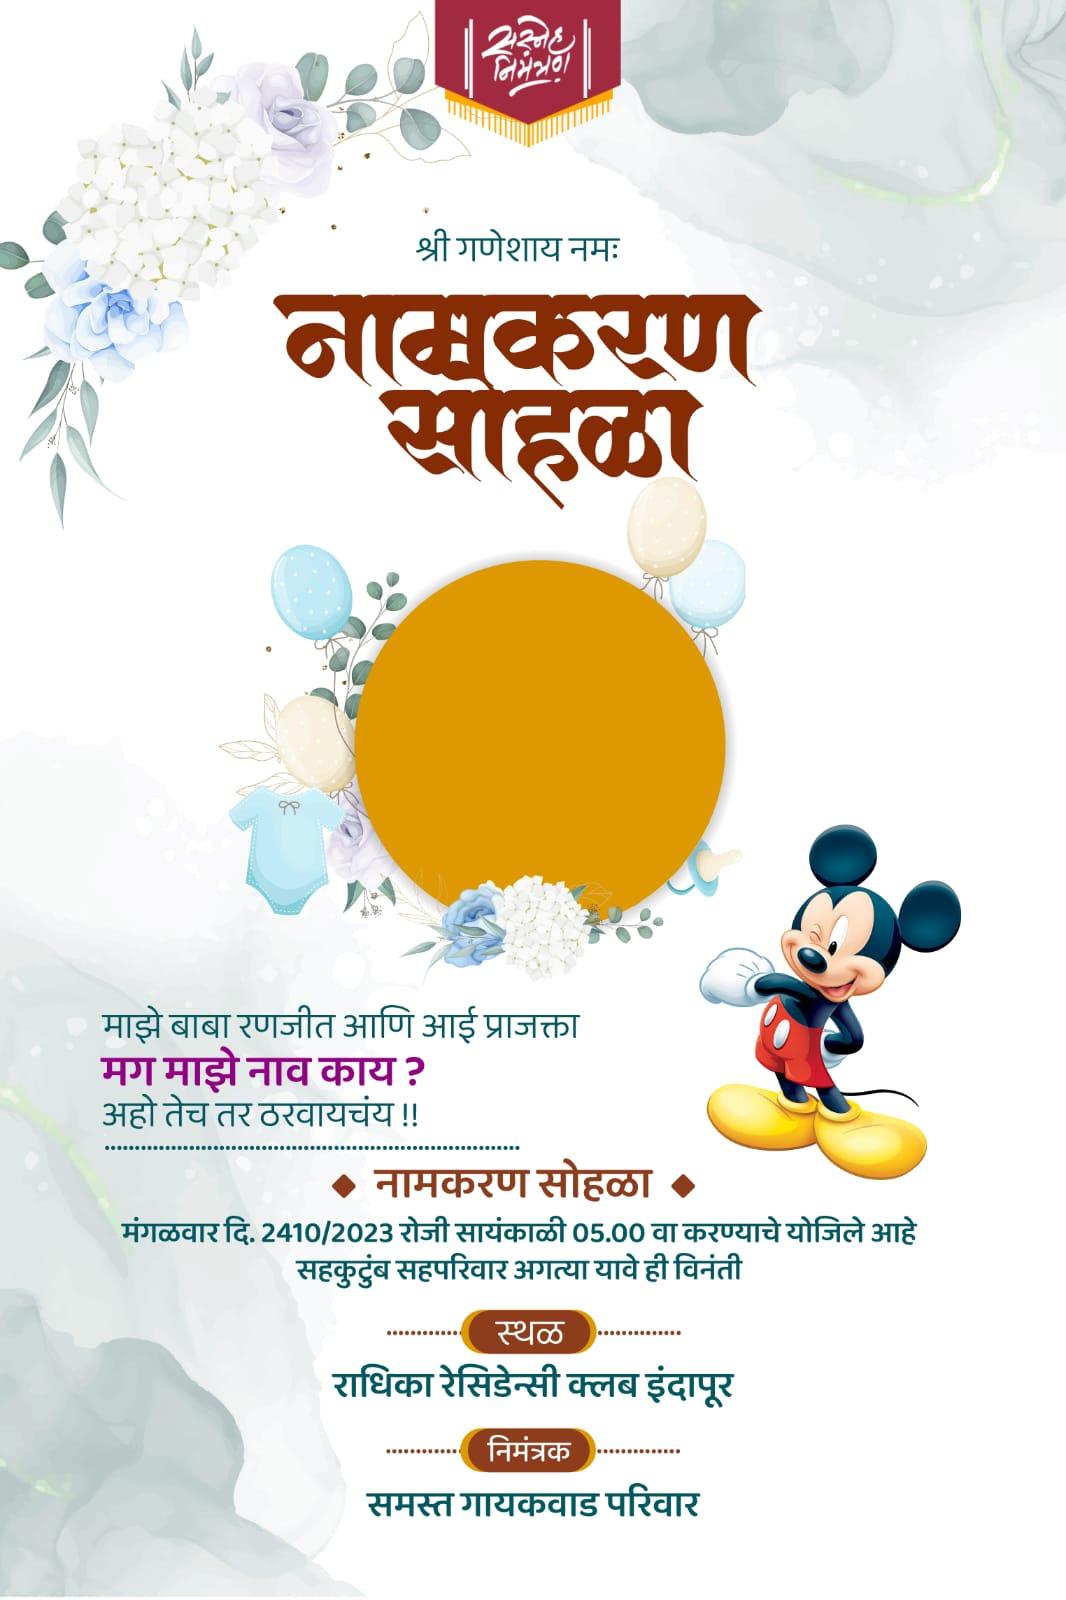 Online Namkaran Sohala Invitation Card In Marathi